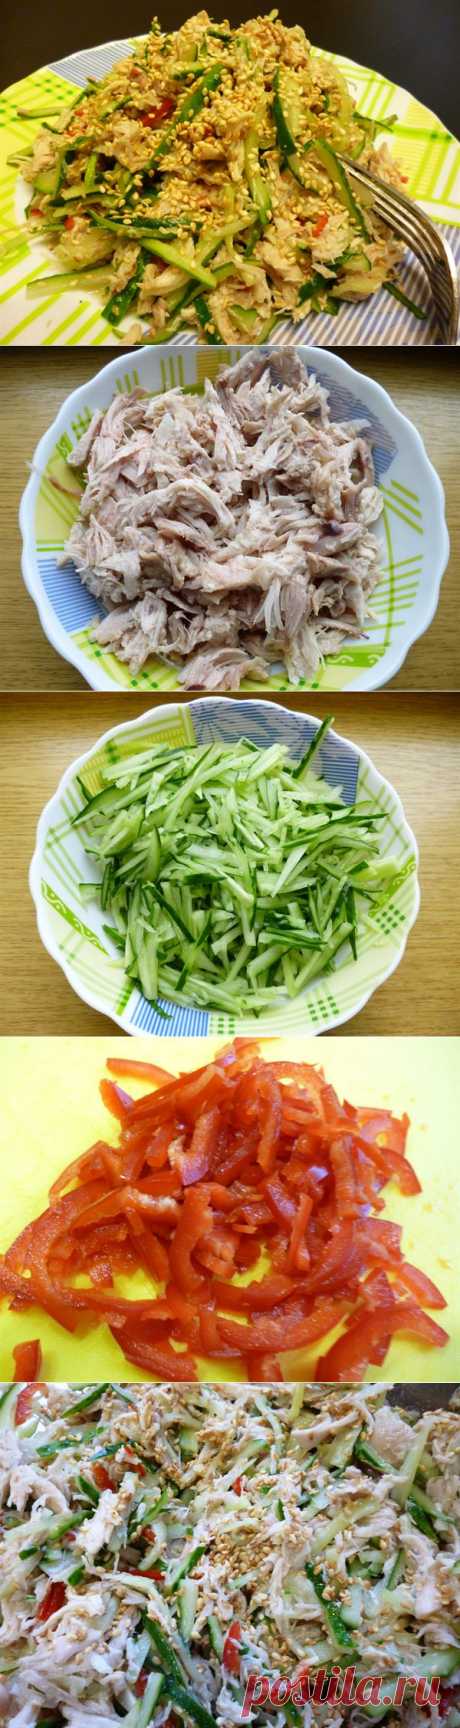 Вьетнамская кухня, рецепт: Салат с курицей и огурцами по-вьетнамски